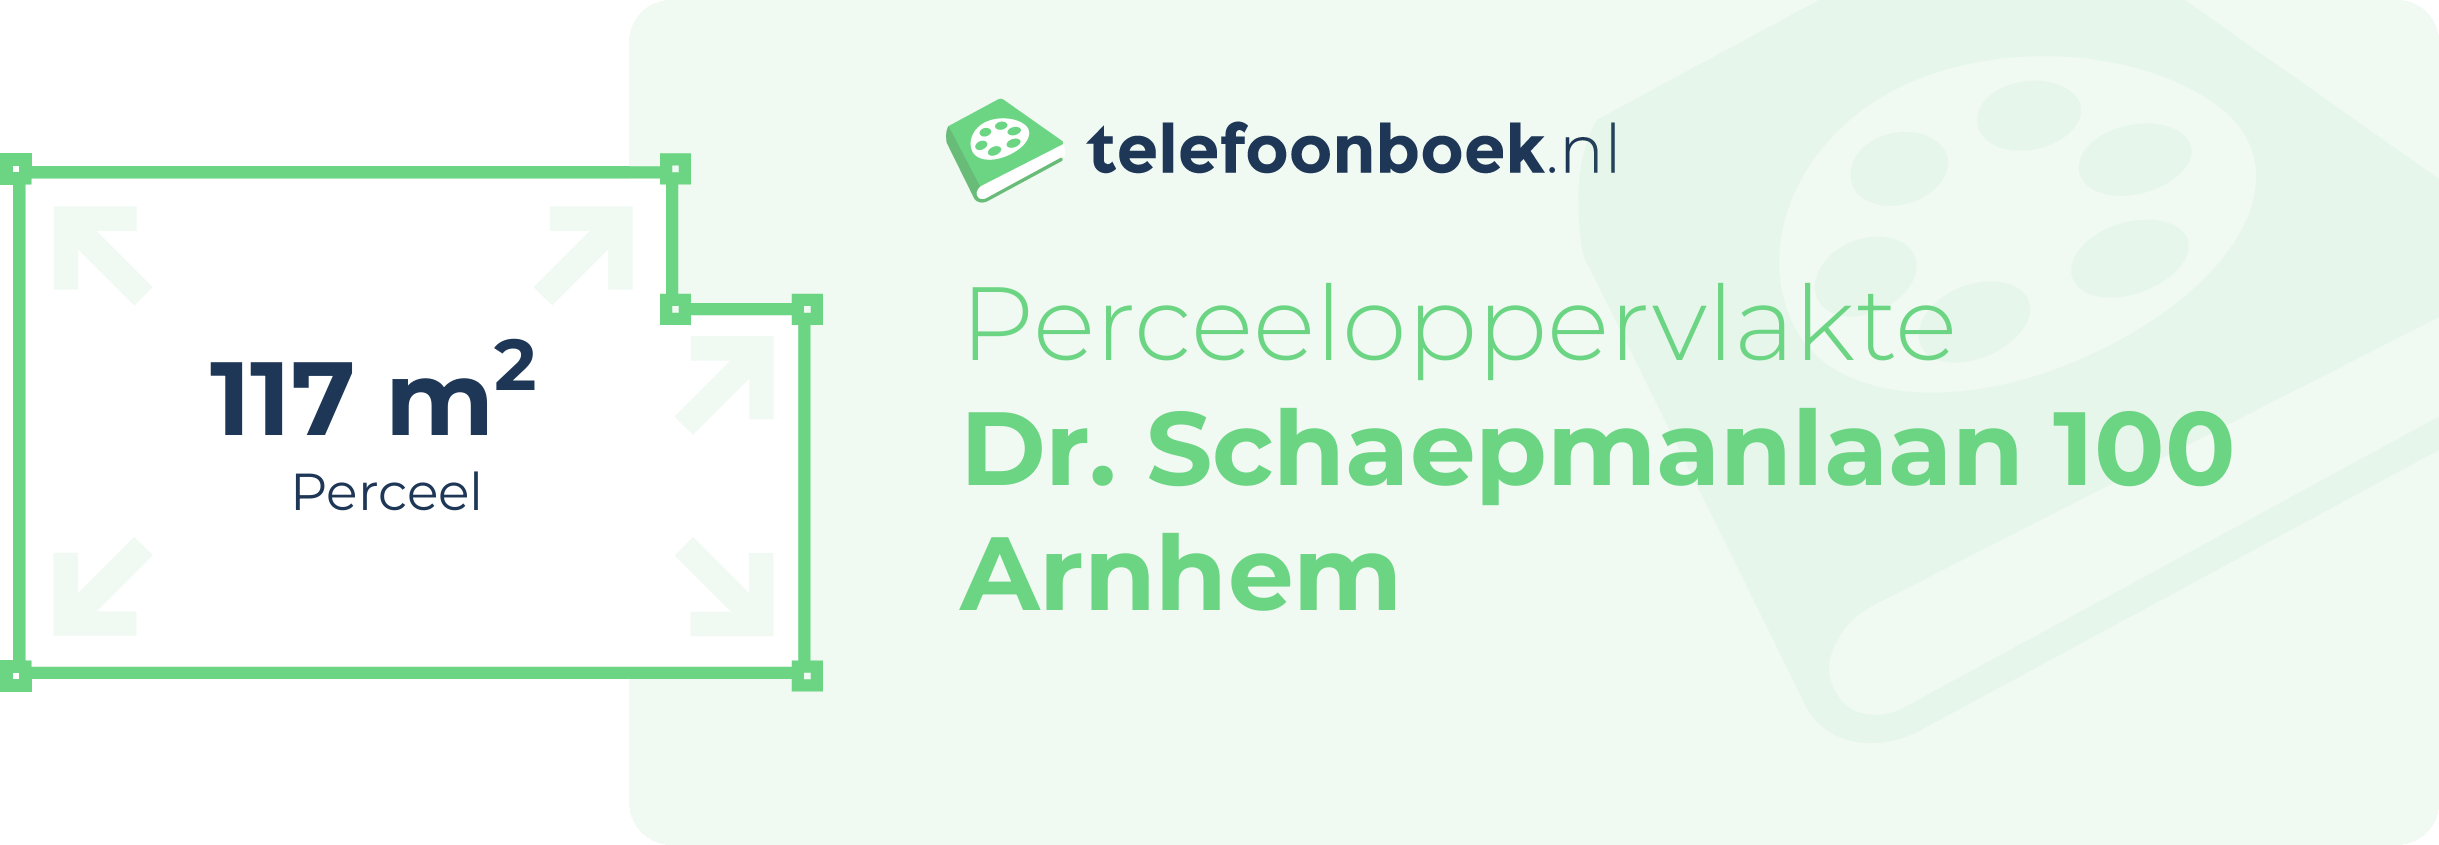 Perceeloppervlakte Dr. Schaepmanlaan 100 Arnhem